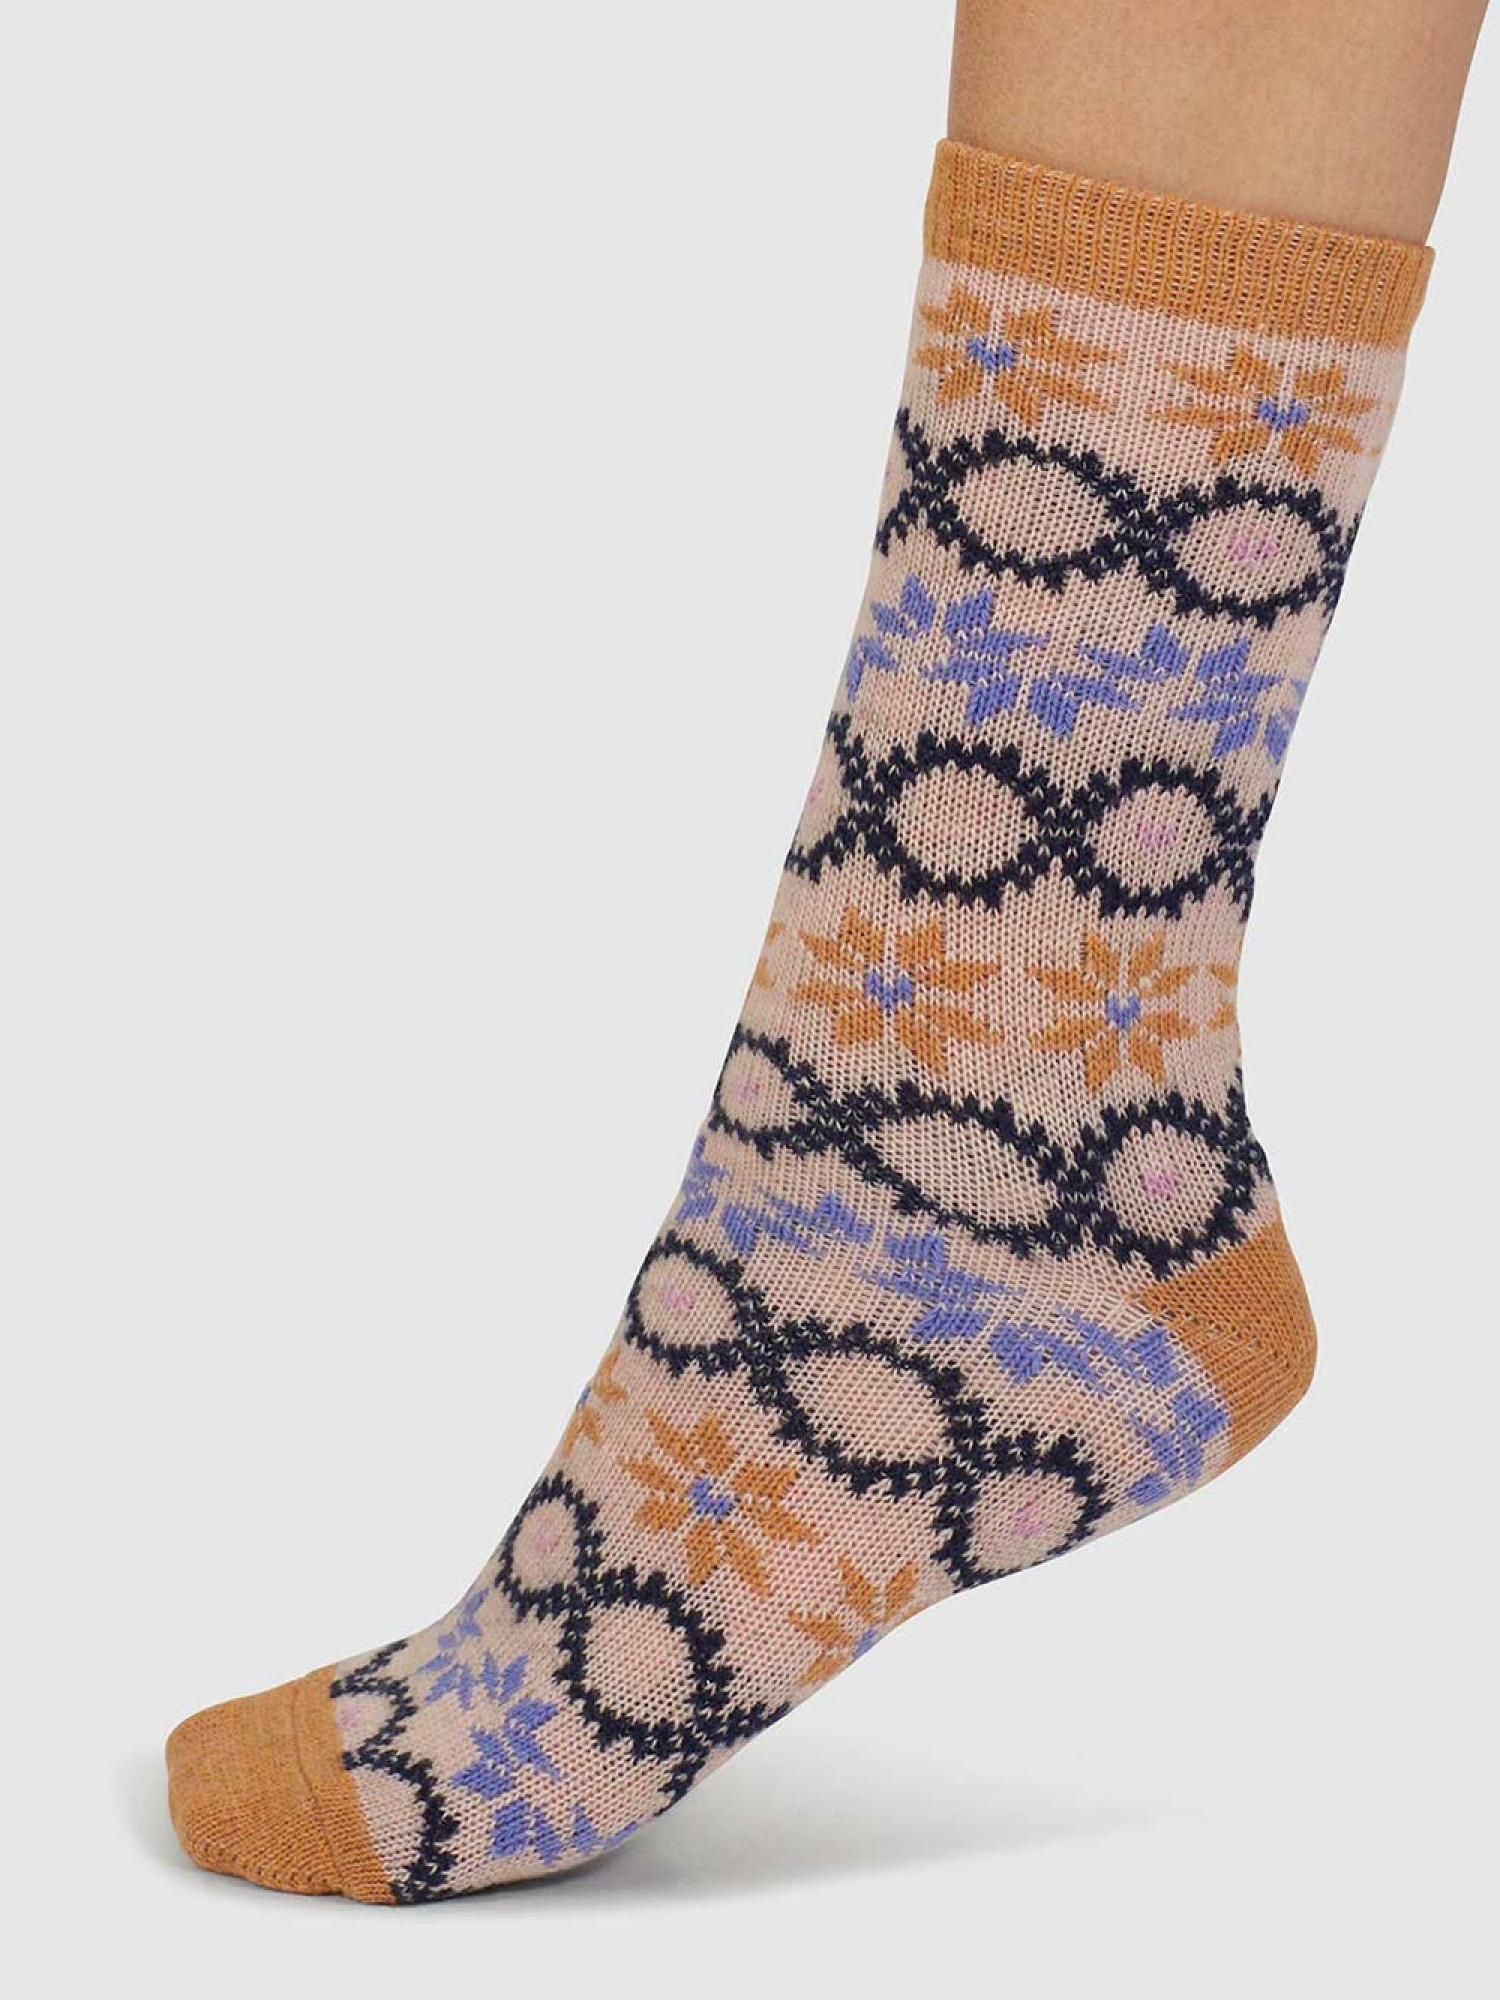 Warme Socken für online | Frauen shoppen Kuschelsocken - Sockenduo